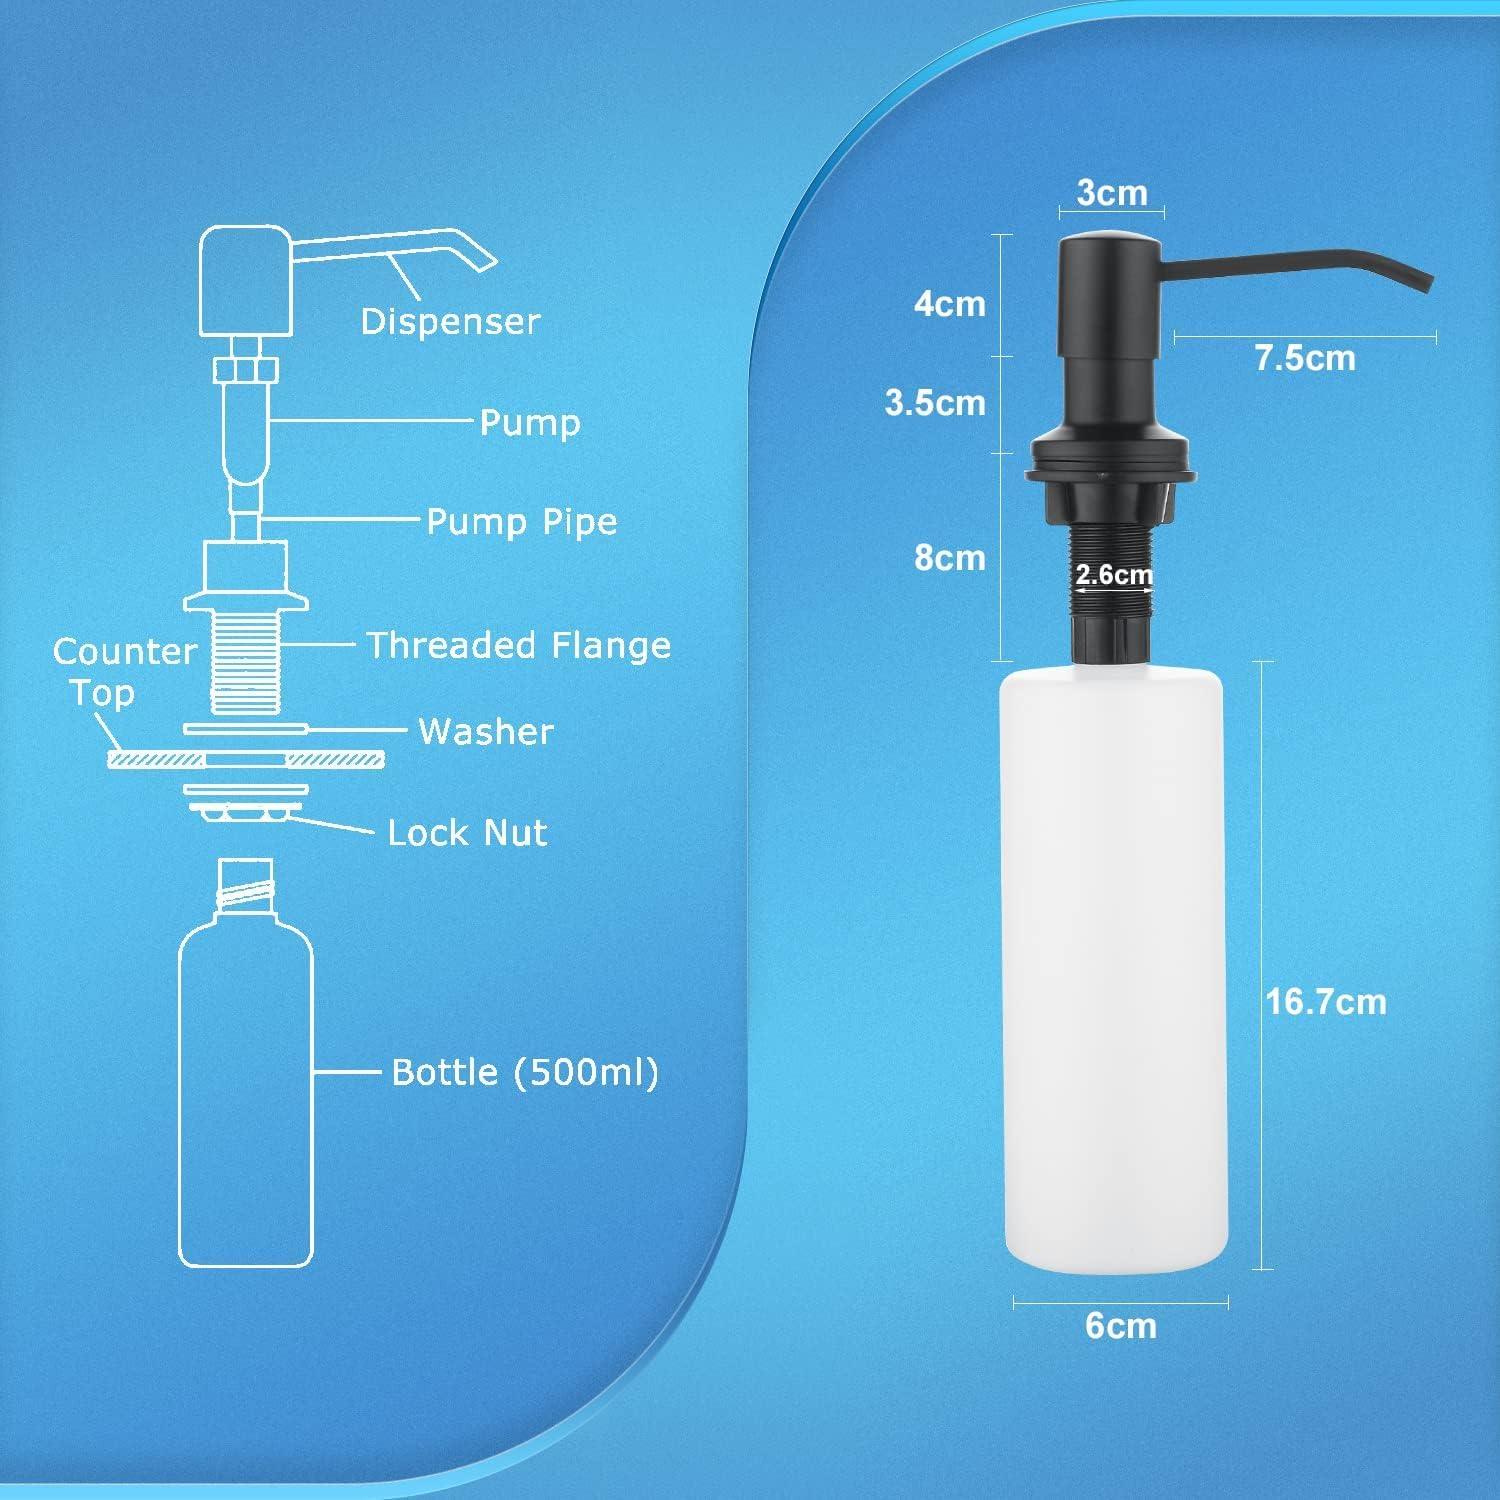 Fossa Soap Dispenser for Kitchen Sink Stainless Steel Built in Sink Soap Dispenser with Refillable Bottle 300ml Capacity Black - Fossa Home 